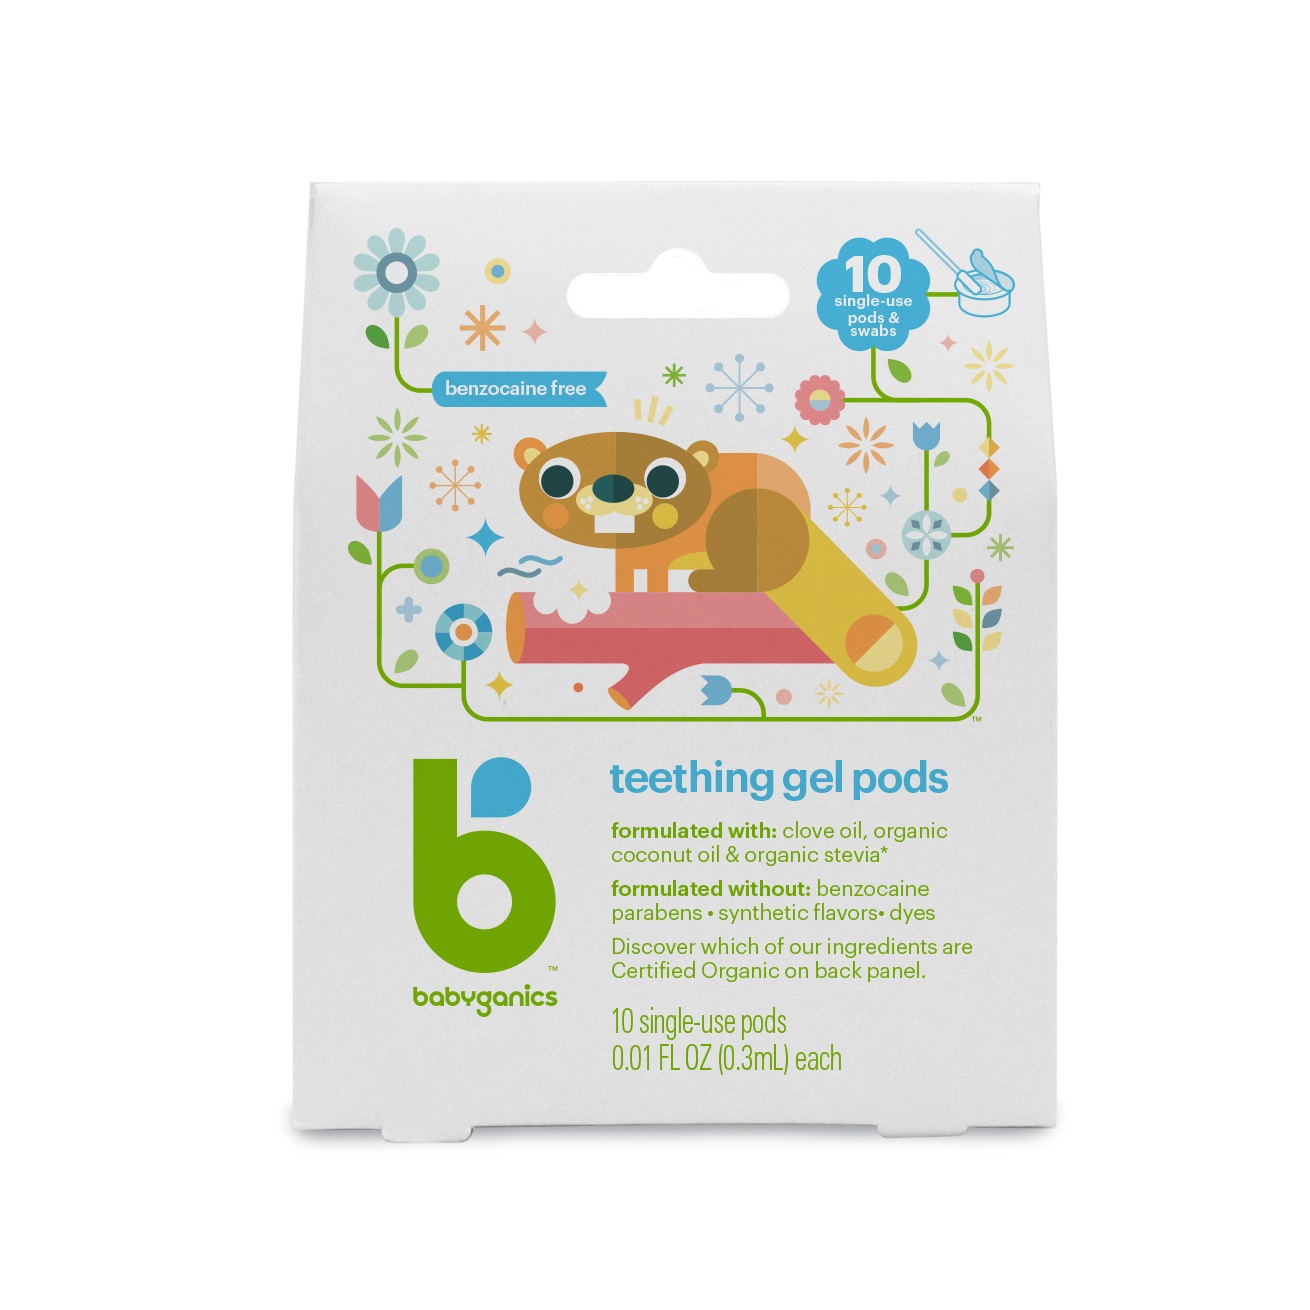 benzocaine free gel teething pods, 10 single use pods & applicators